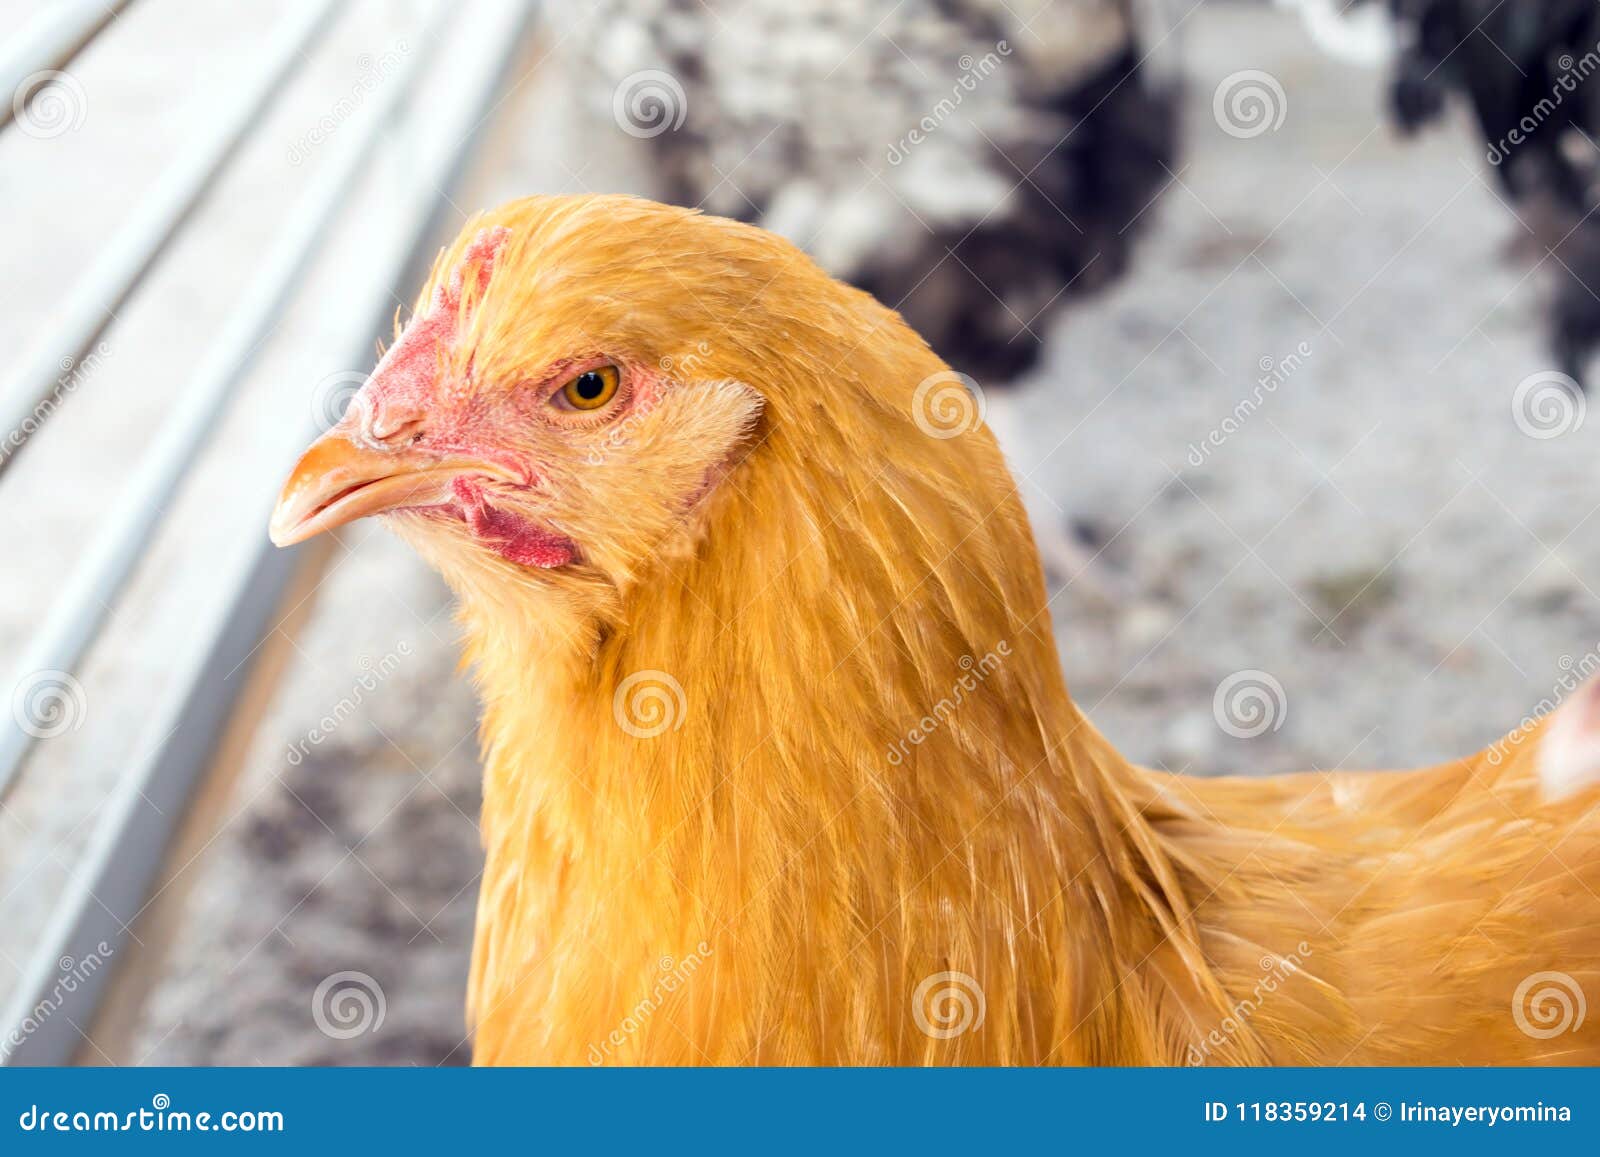 Золотая кура. Курица желтого цвета. Золотая курица. Порода курей золотистый жёлтые. Курица с золотыми яйцами.